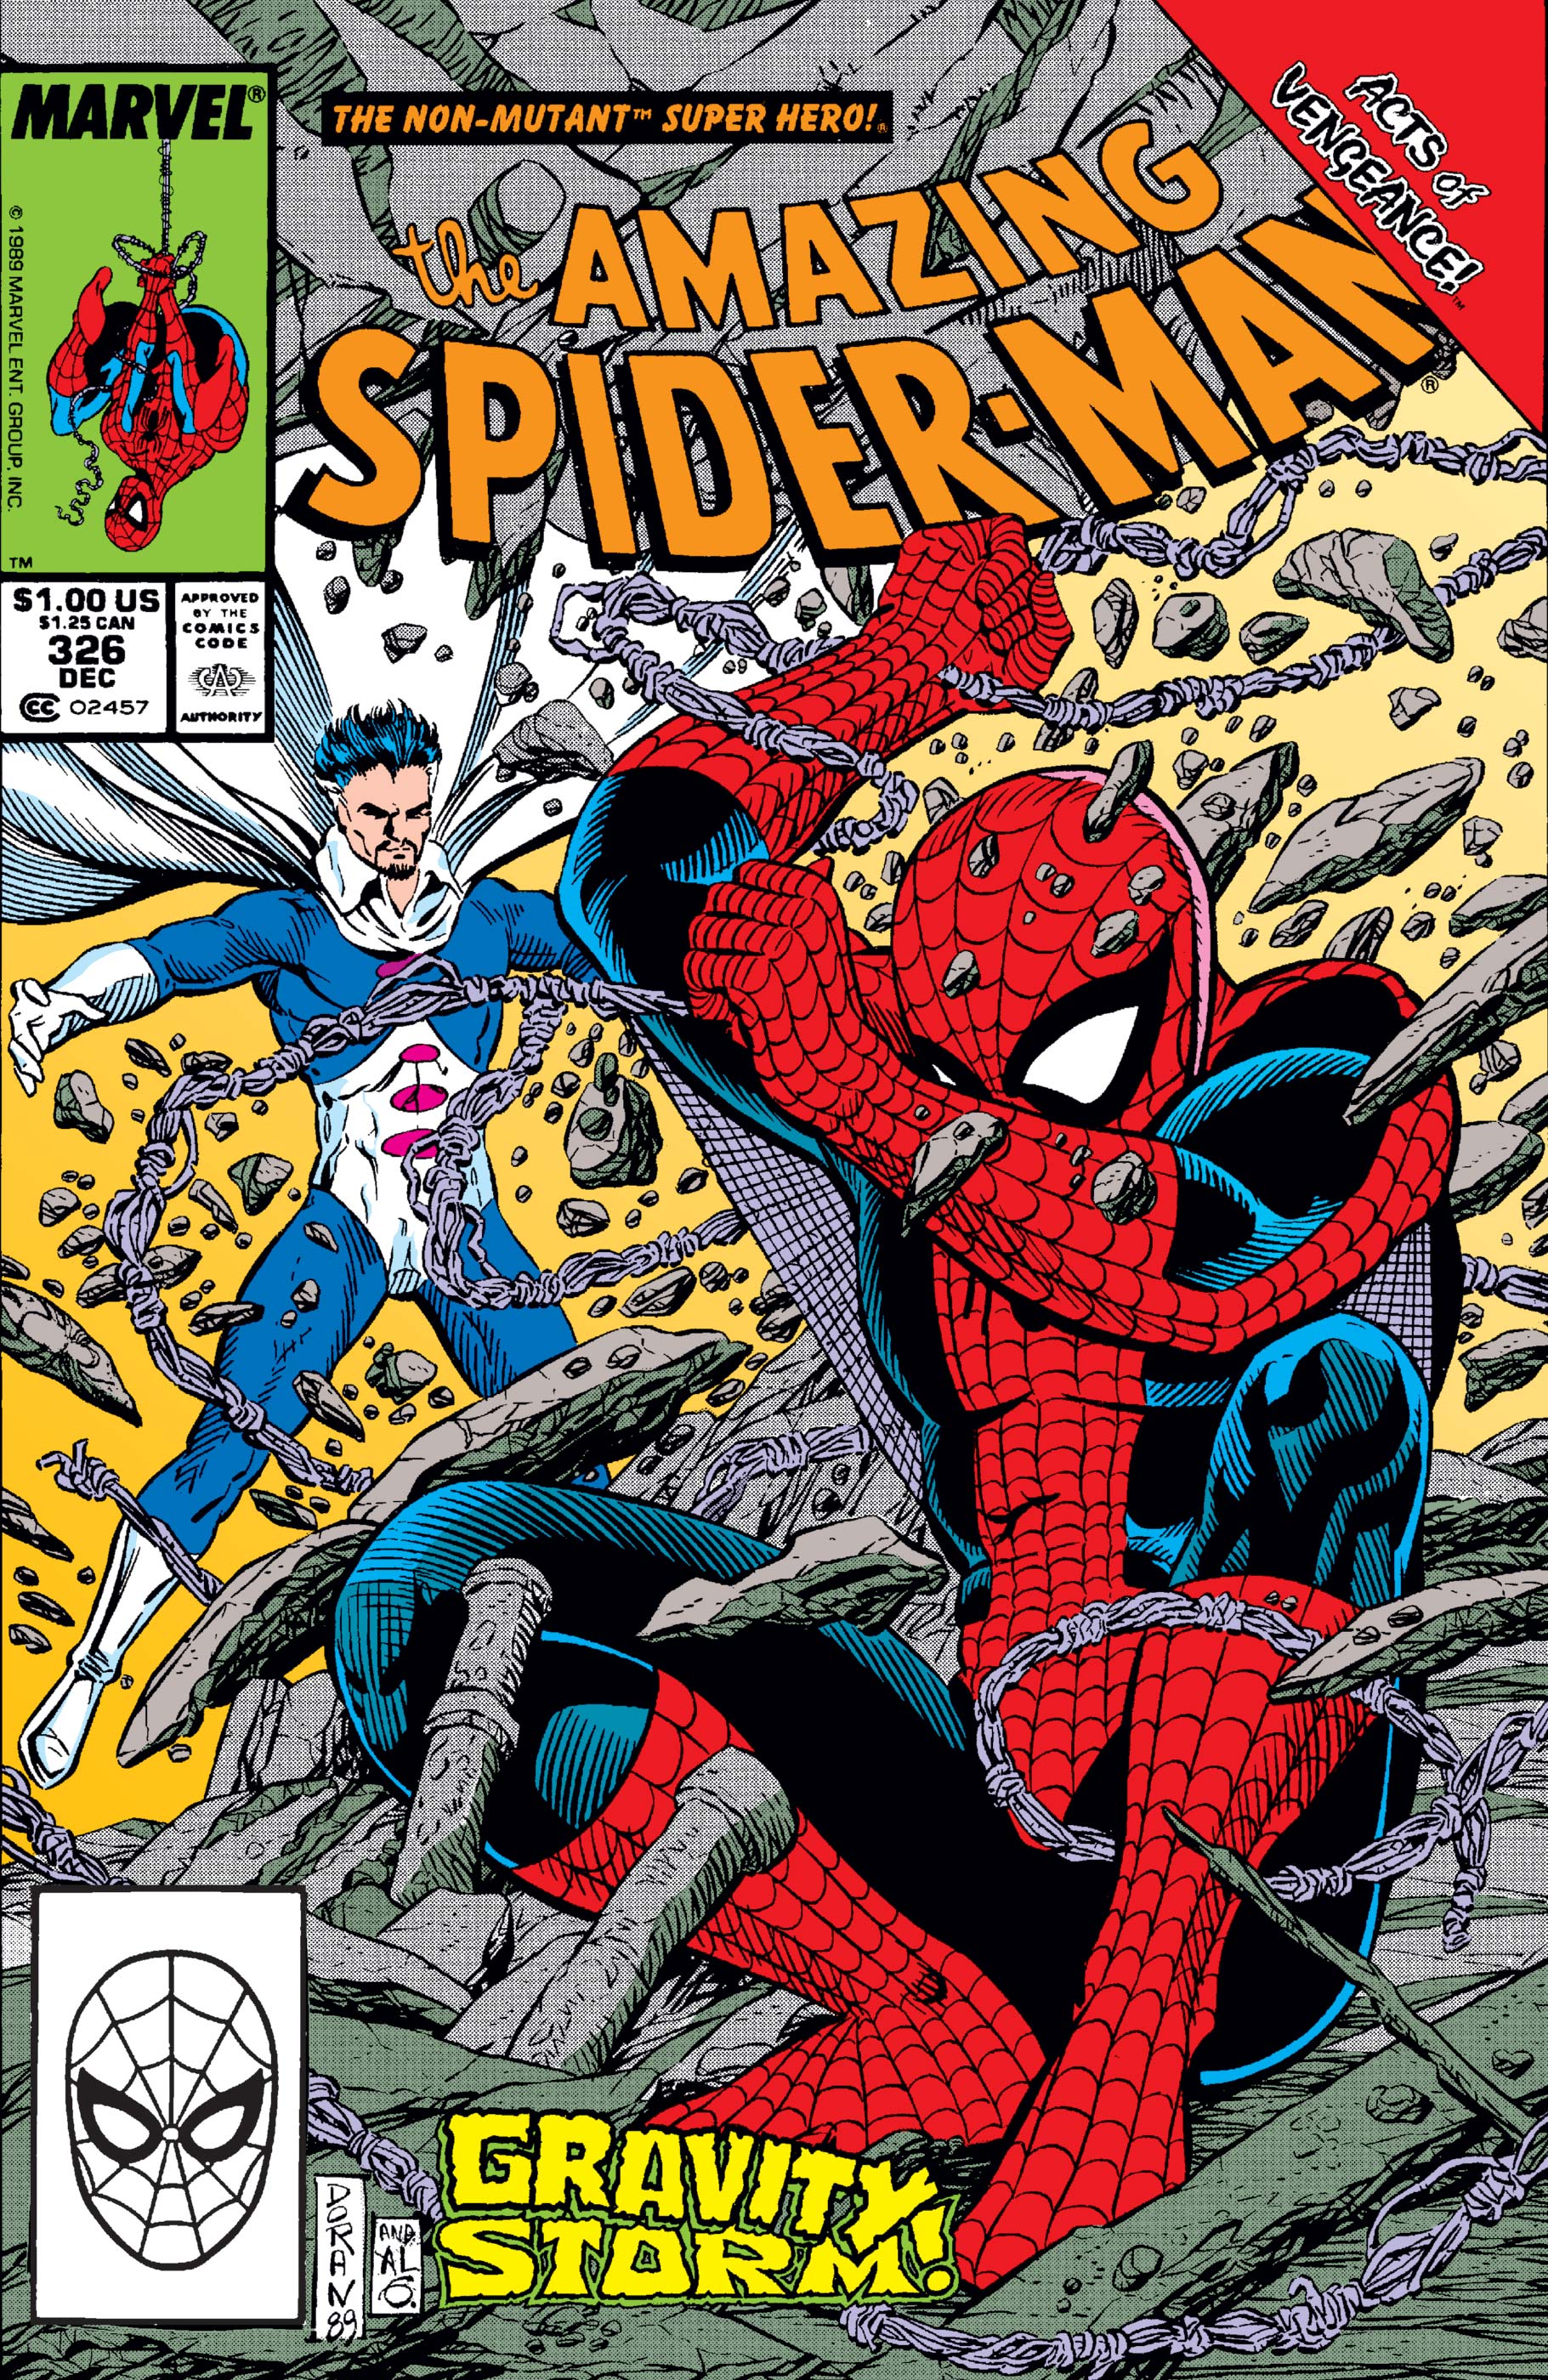 The Amazing Spider-Man (1963) #326